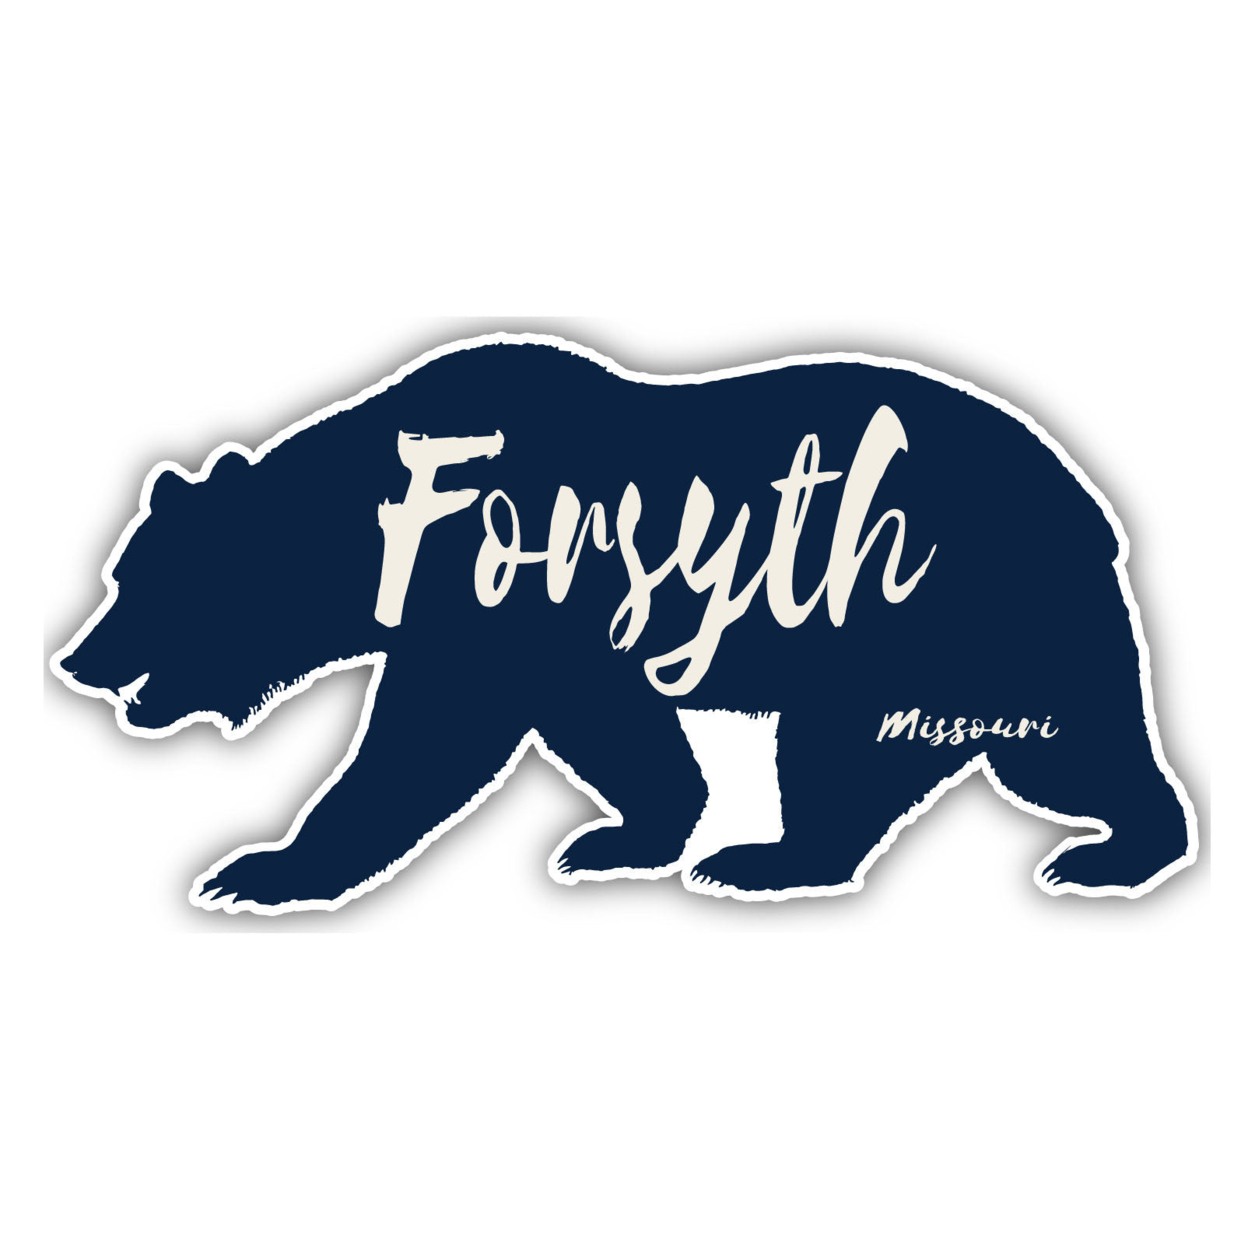 Forsyth Missouri Souvenir Decorative Stickers (Choose Theme And Size) - Single Unit, 6-Inch, Bear